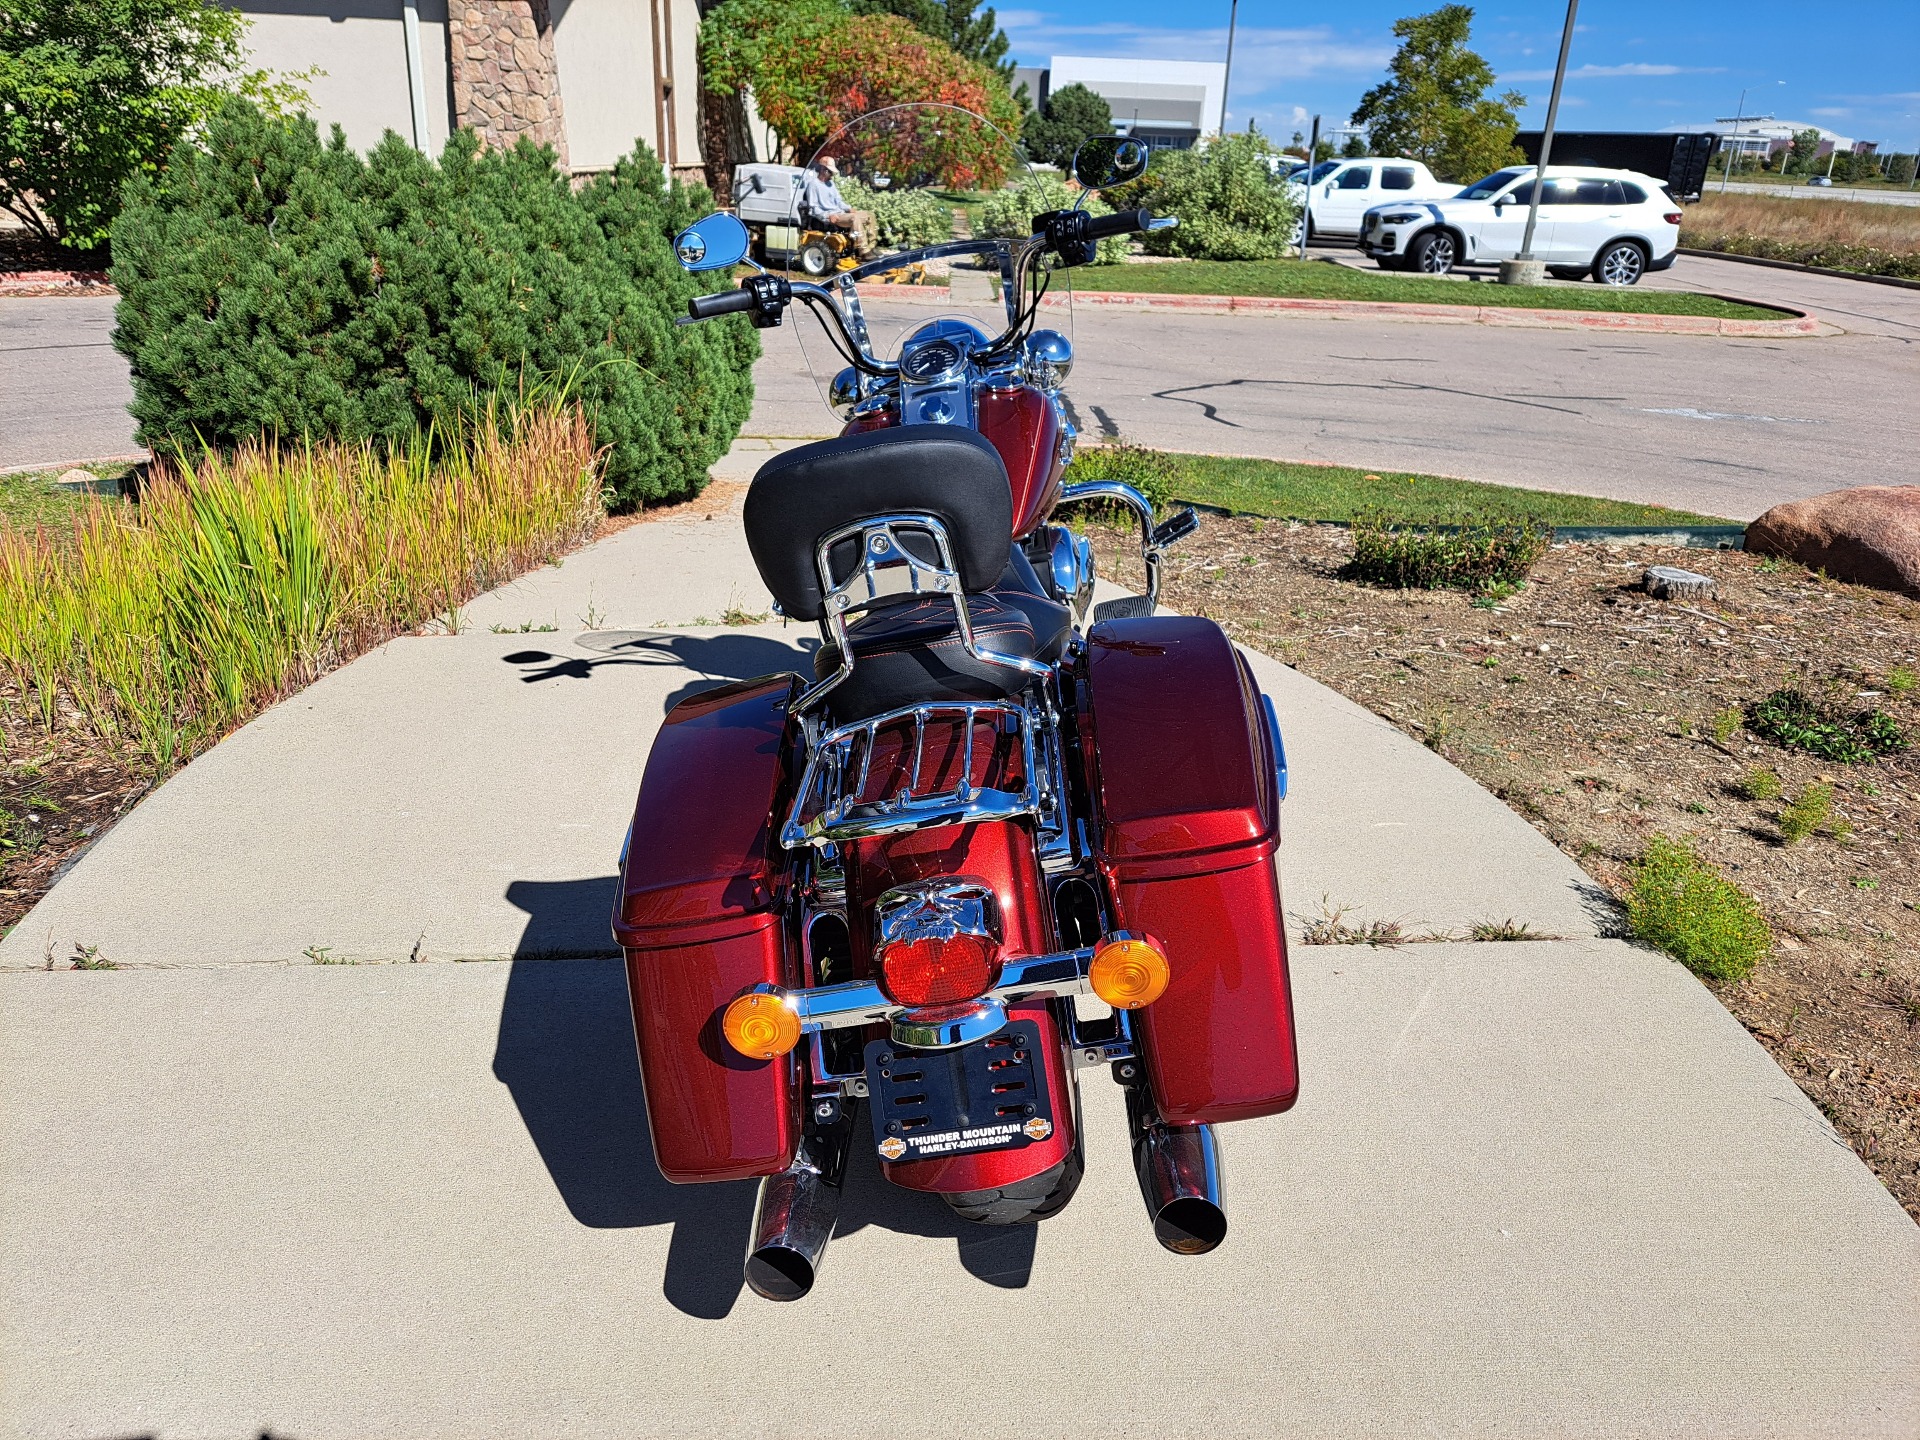 2016 Harley-Davidson Road King® in Loveland, Colorado - Photo 4